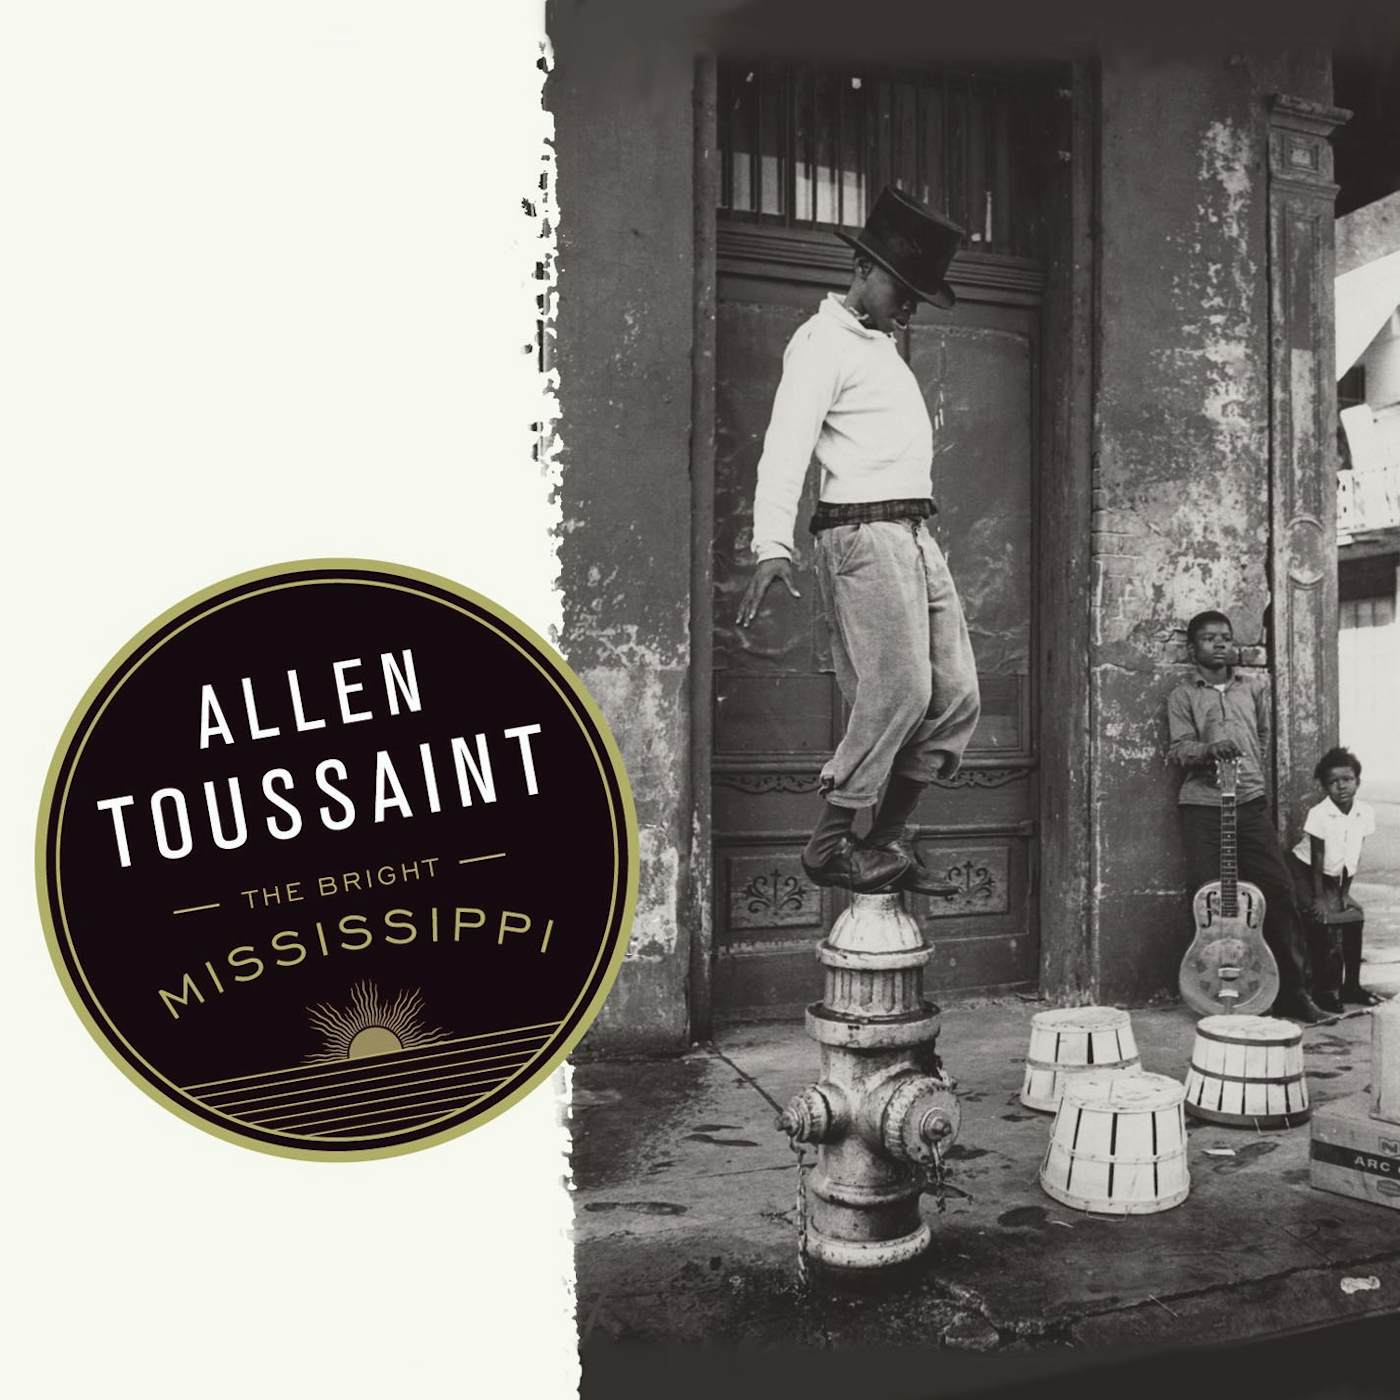 Allen Toussaint Bright Mississippi Vinyl Record